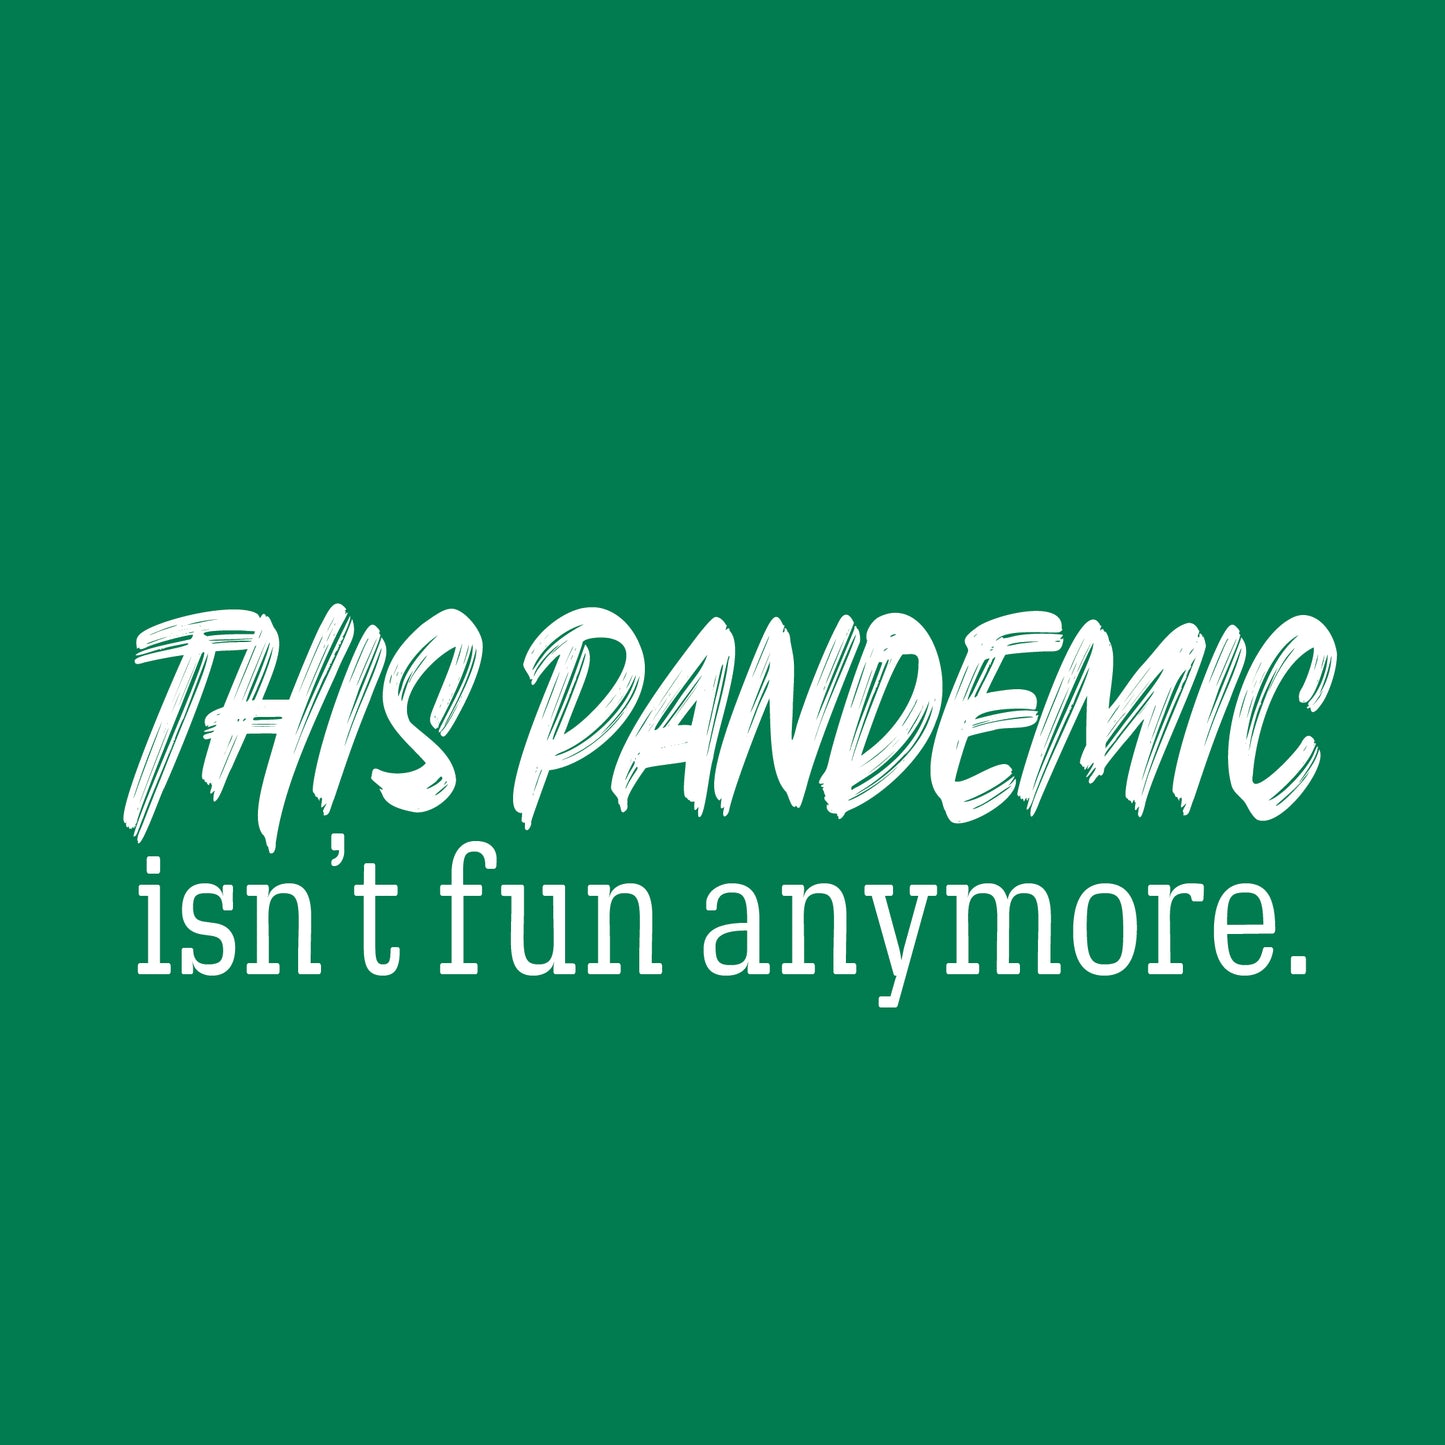 This pandemic isn't fun anymore